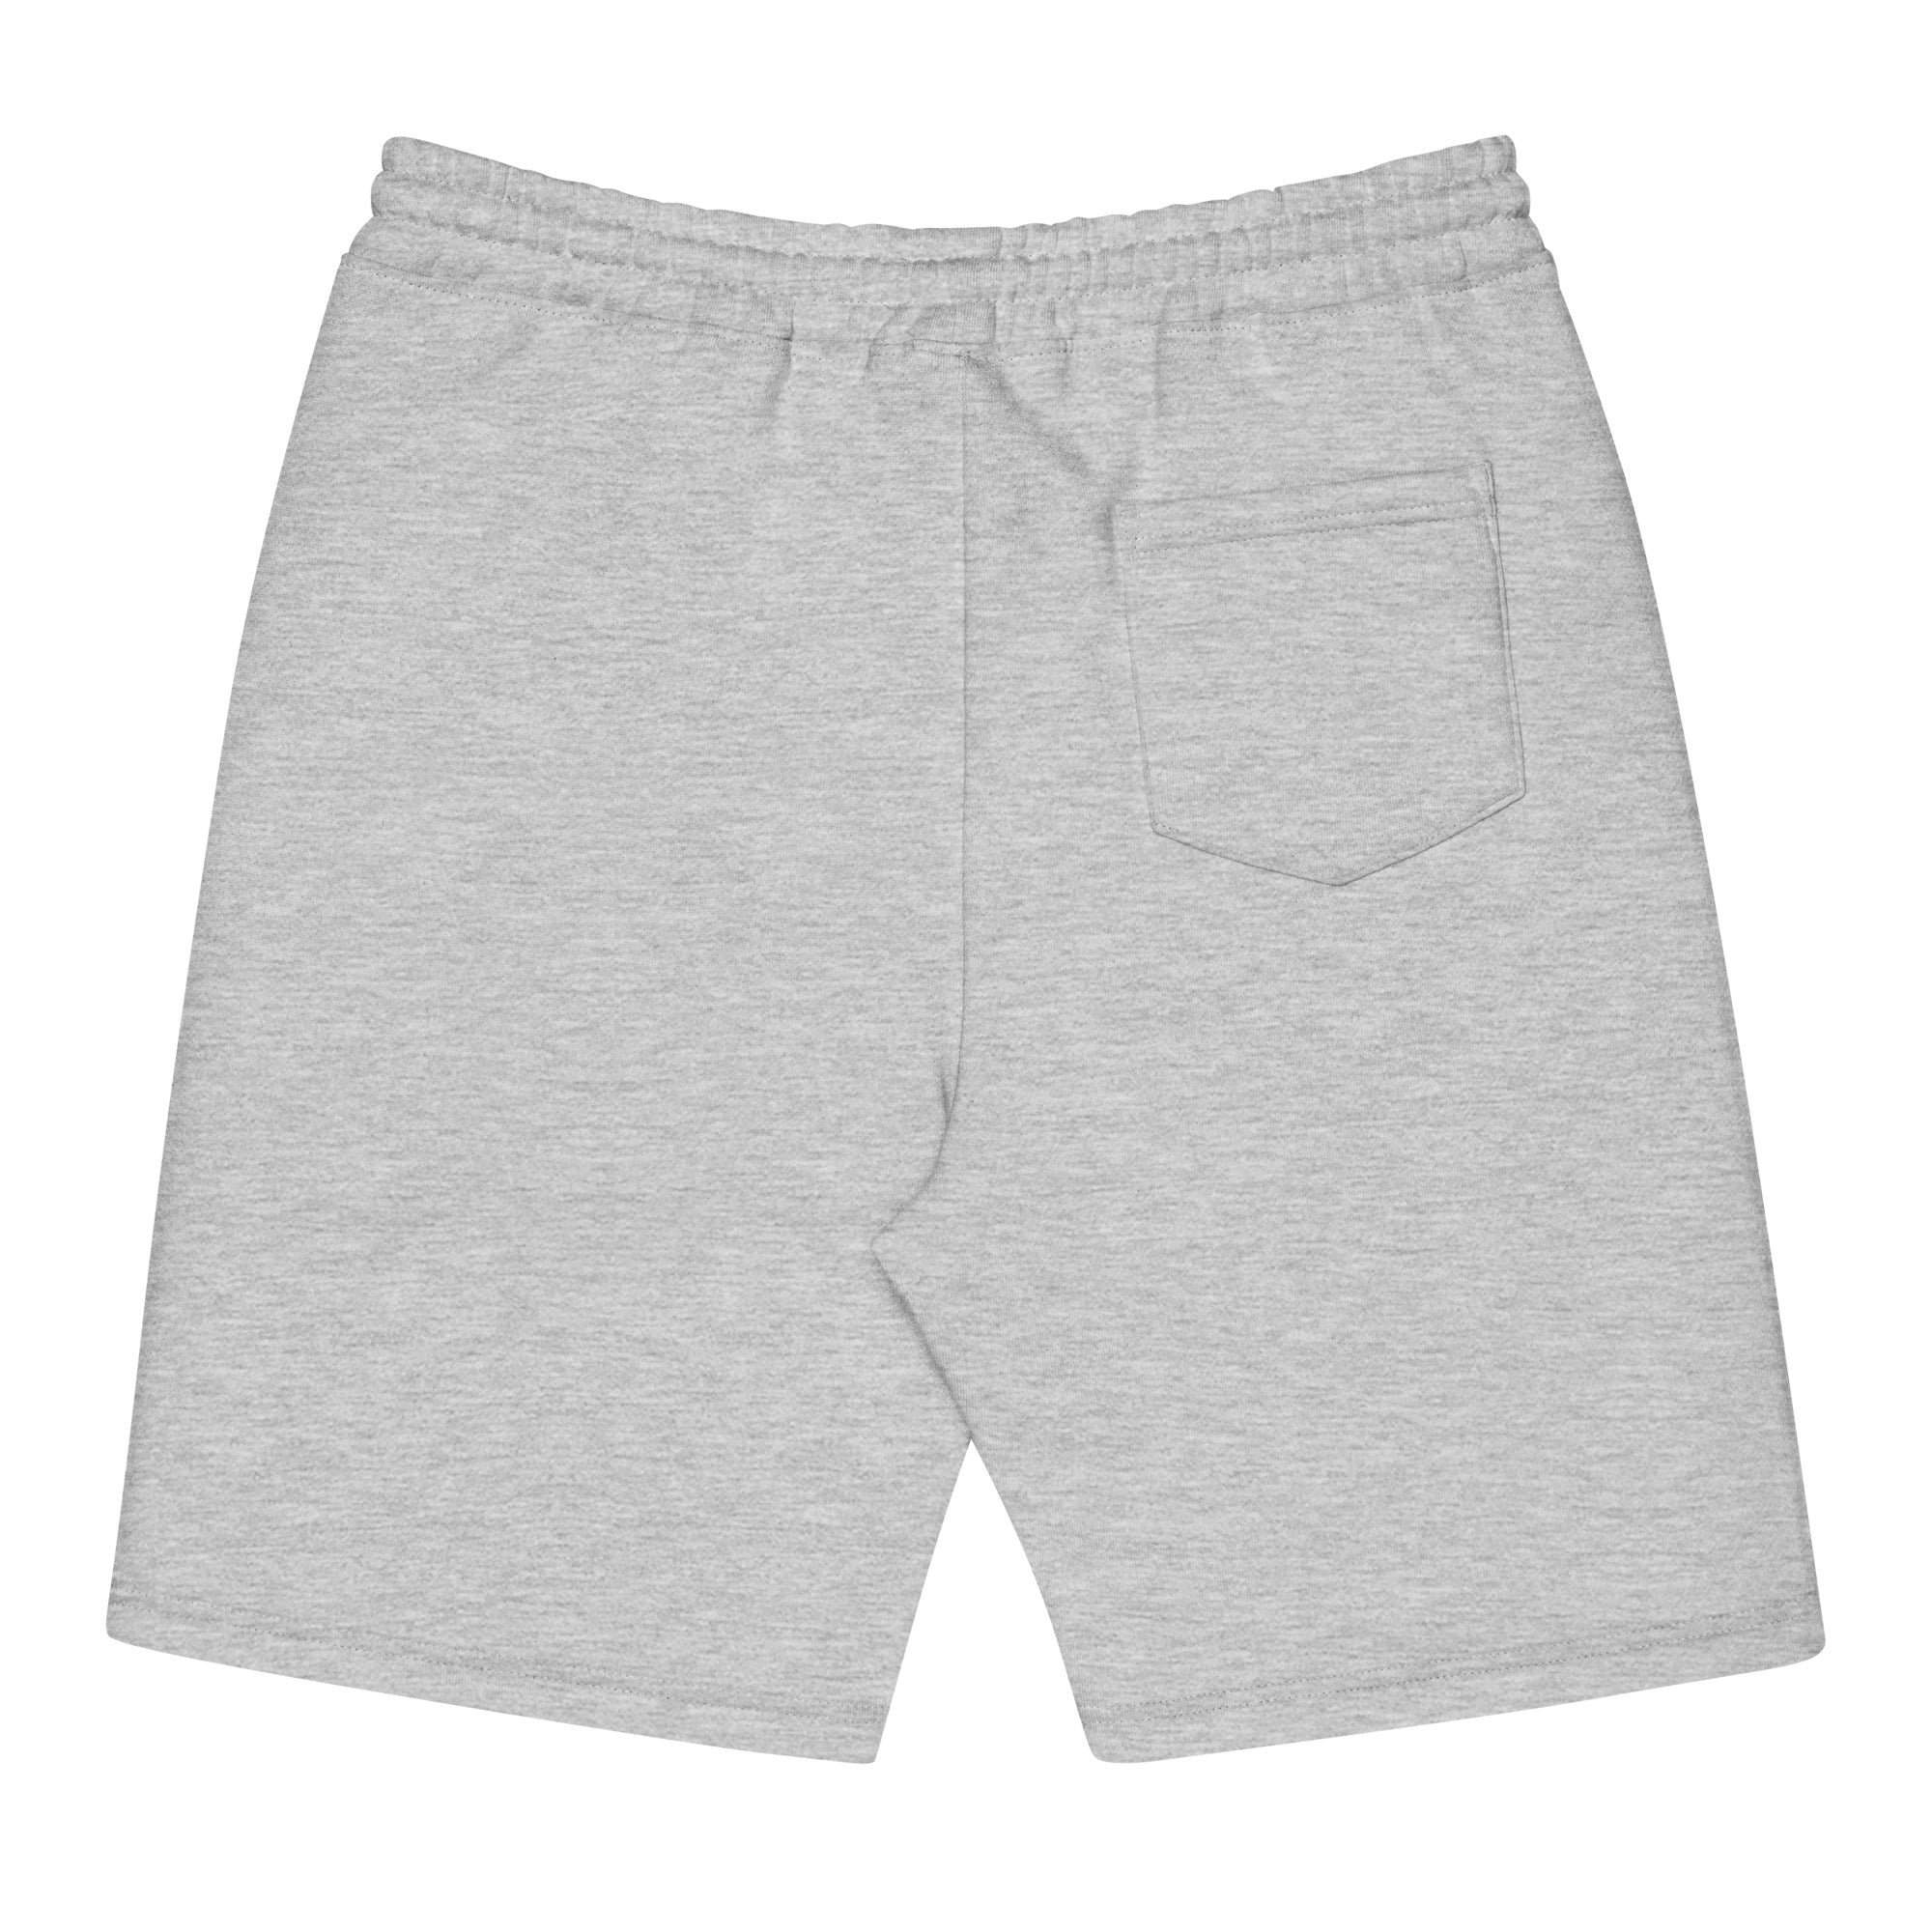 UUCCII Men's fleece shorts